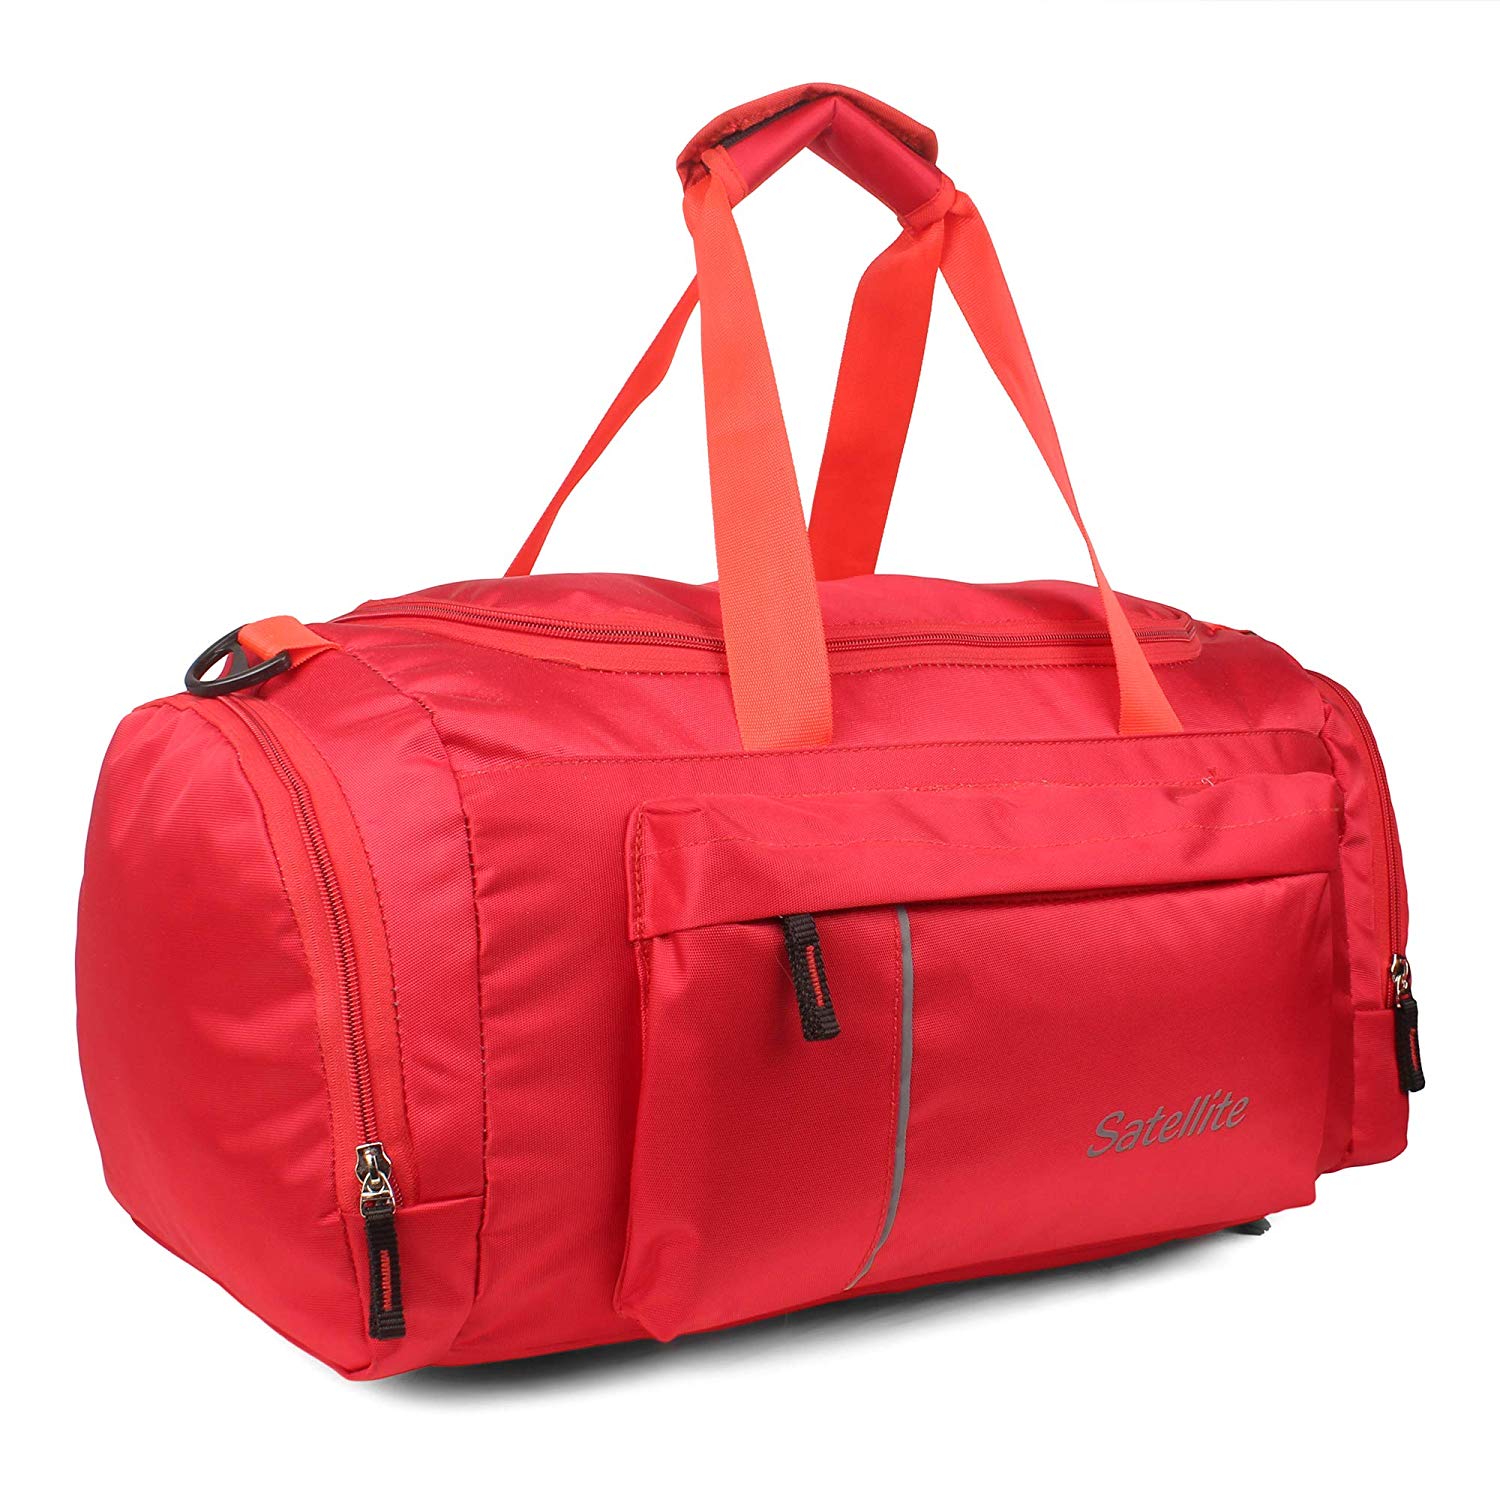 Buy Satellite Leader Multi Pocket Heavy Duty Travel Bags | Duffle Bag ...